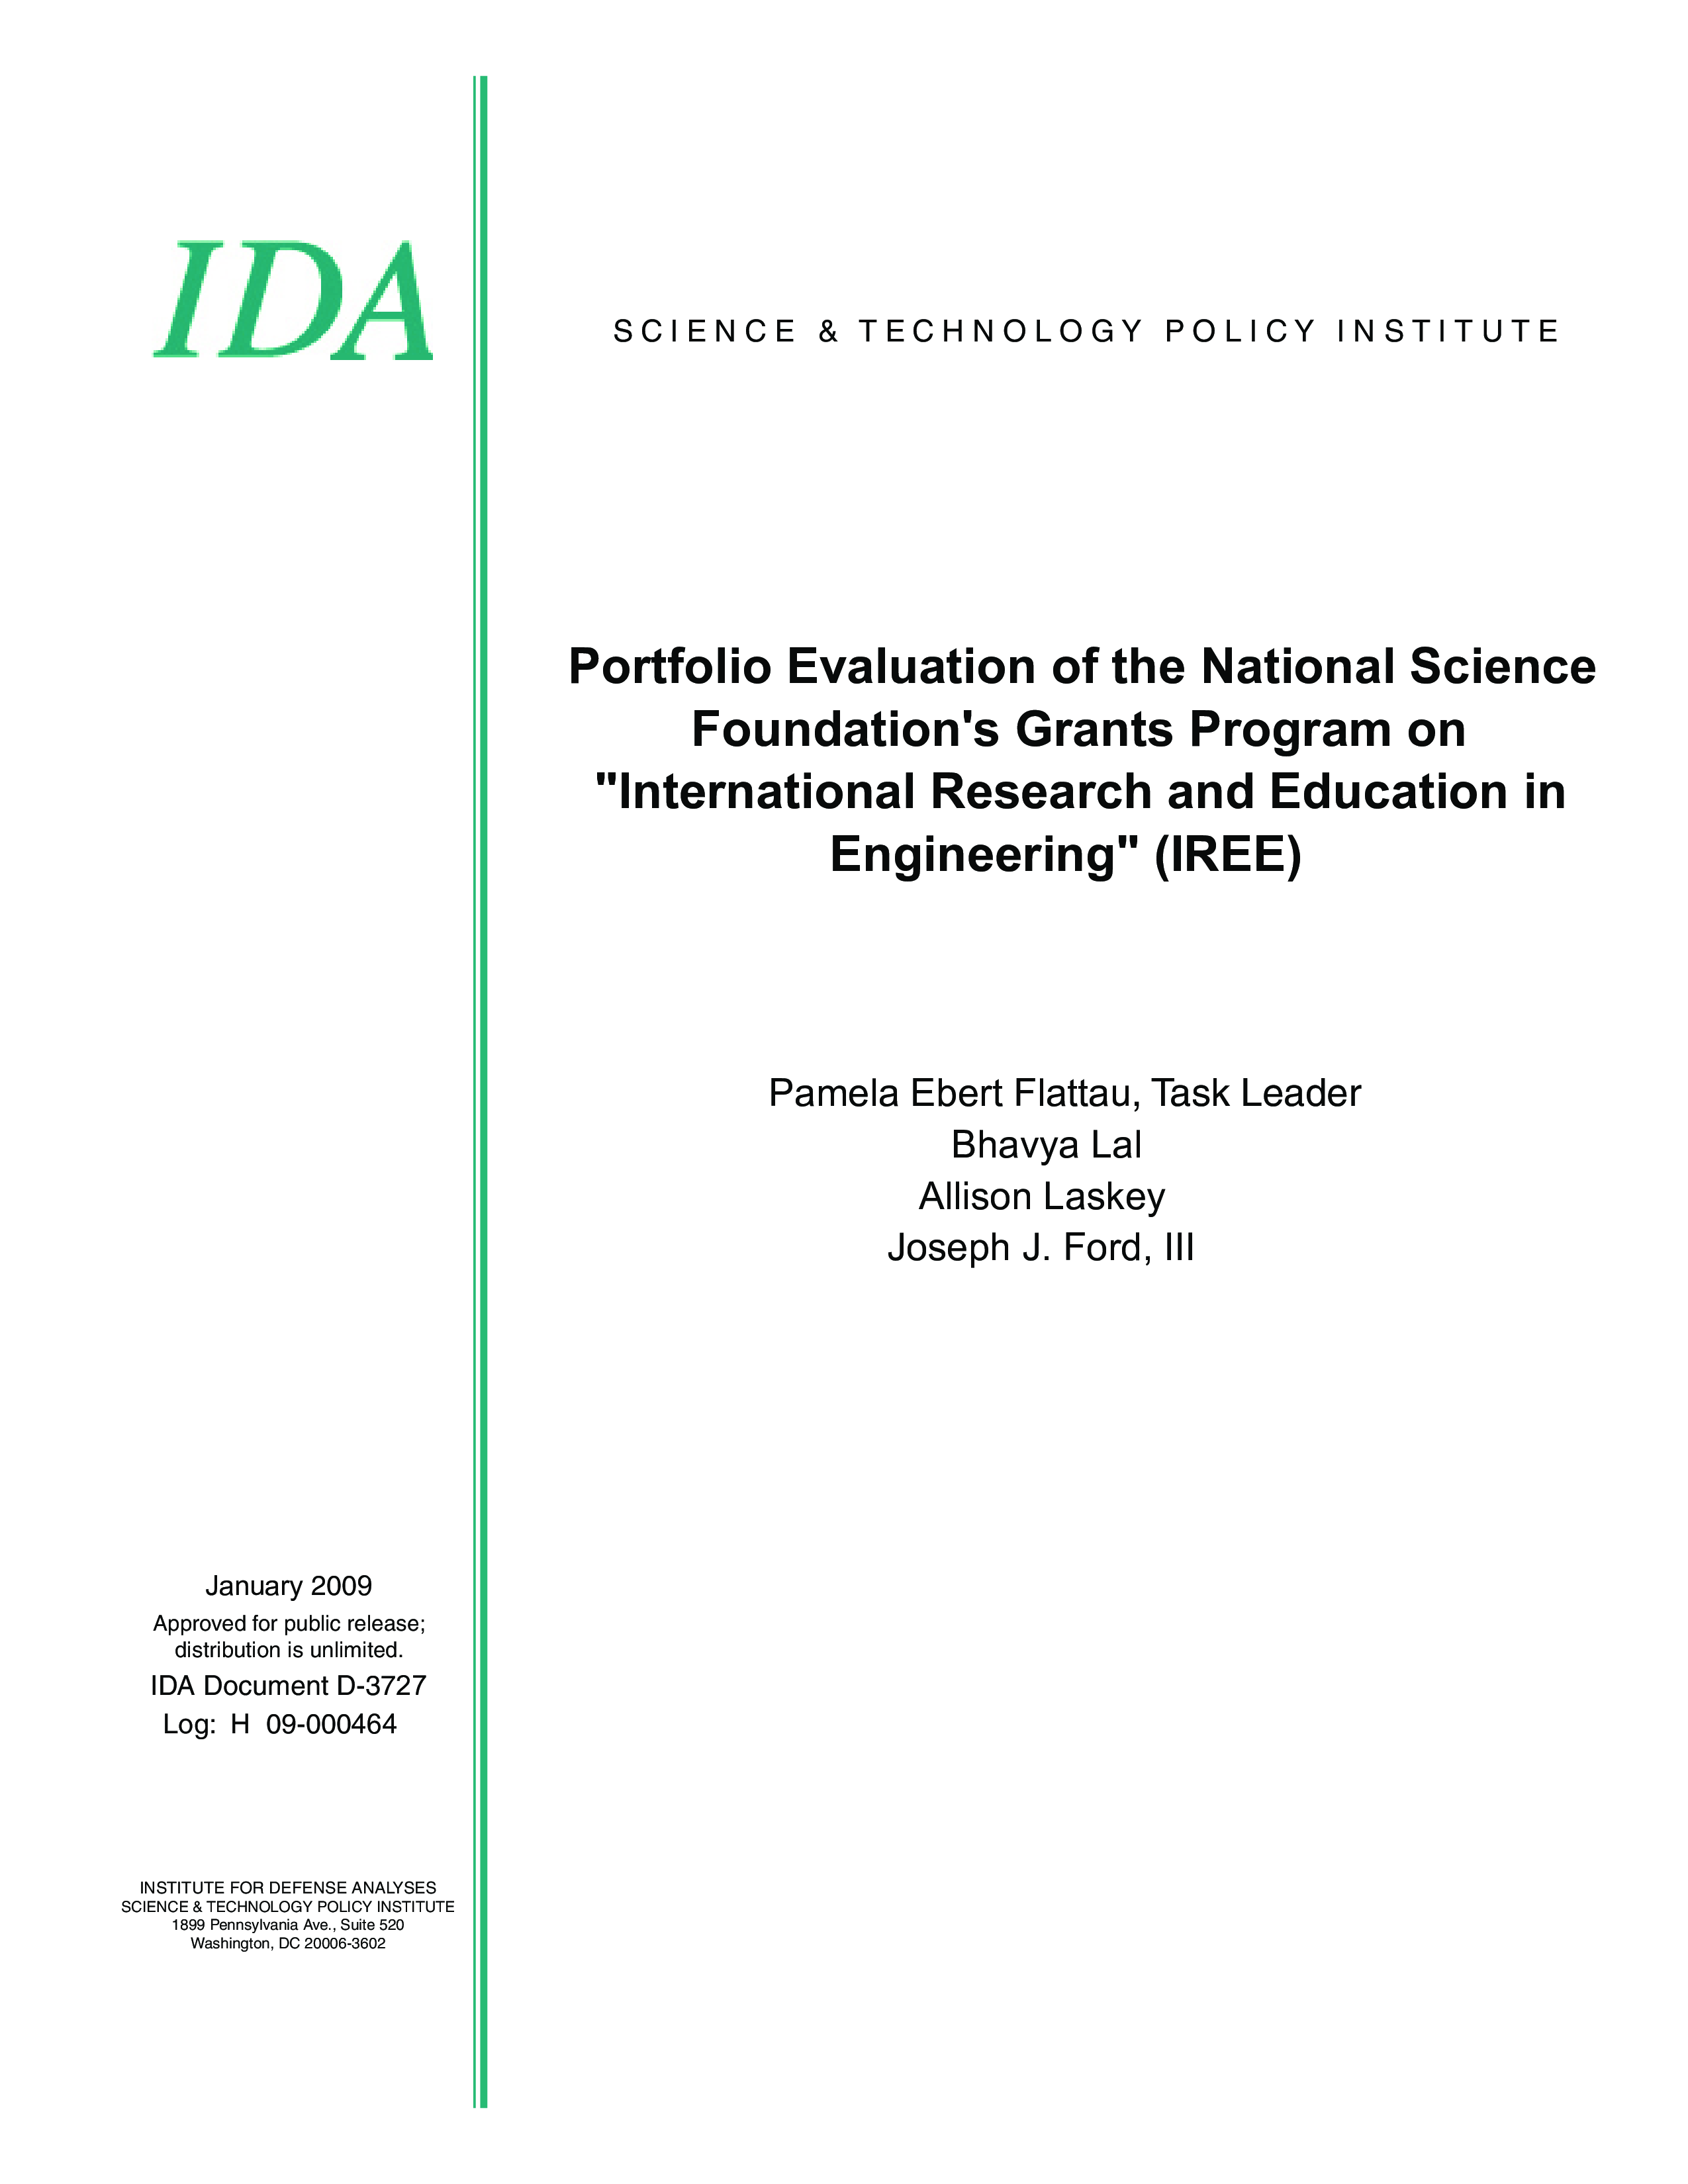 Portfolio Evaluation of the National Science Foundation